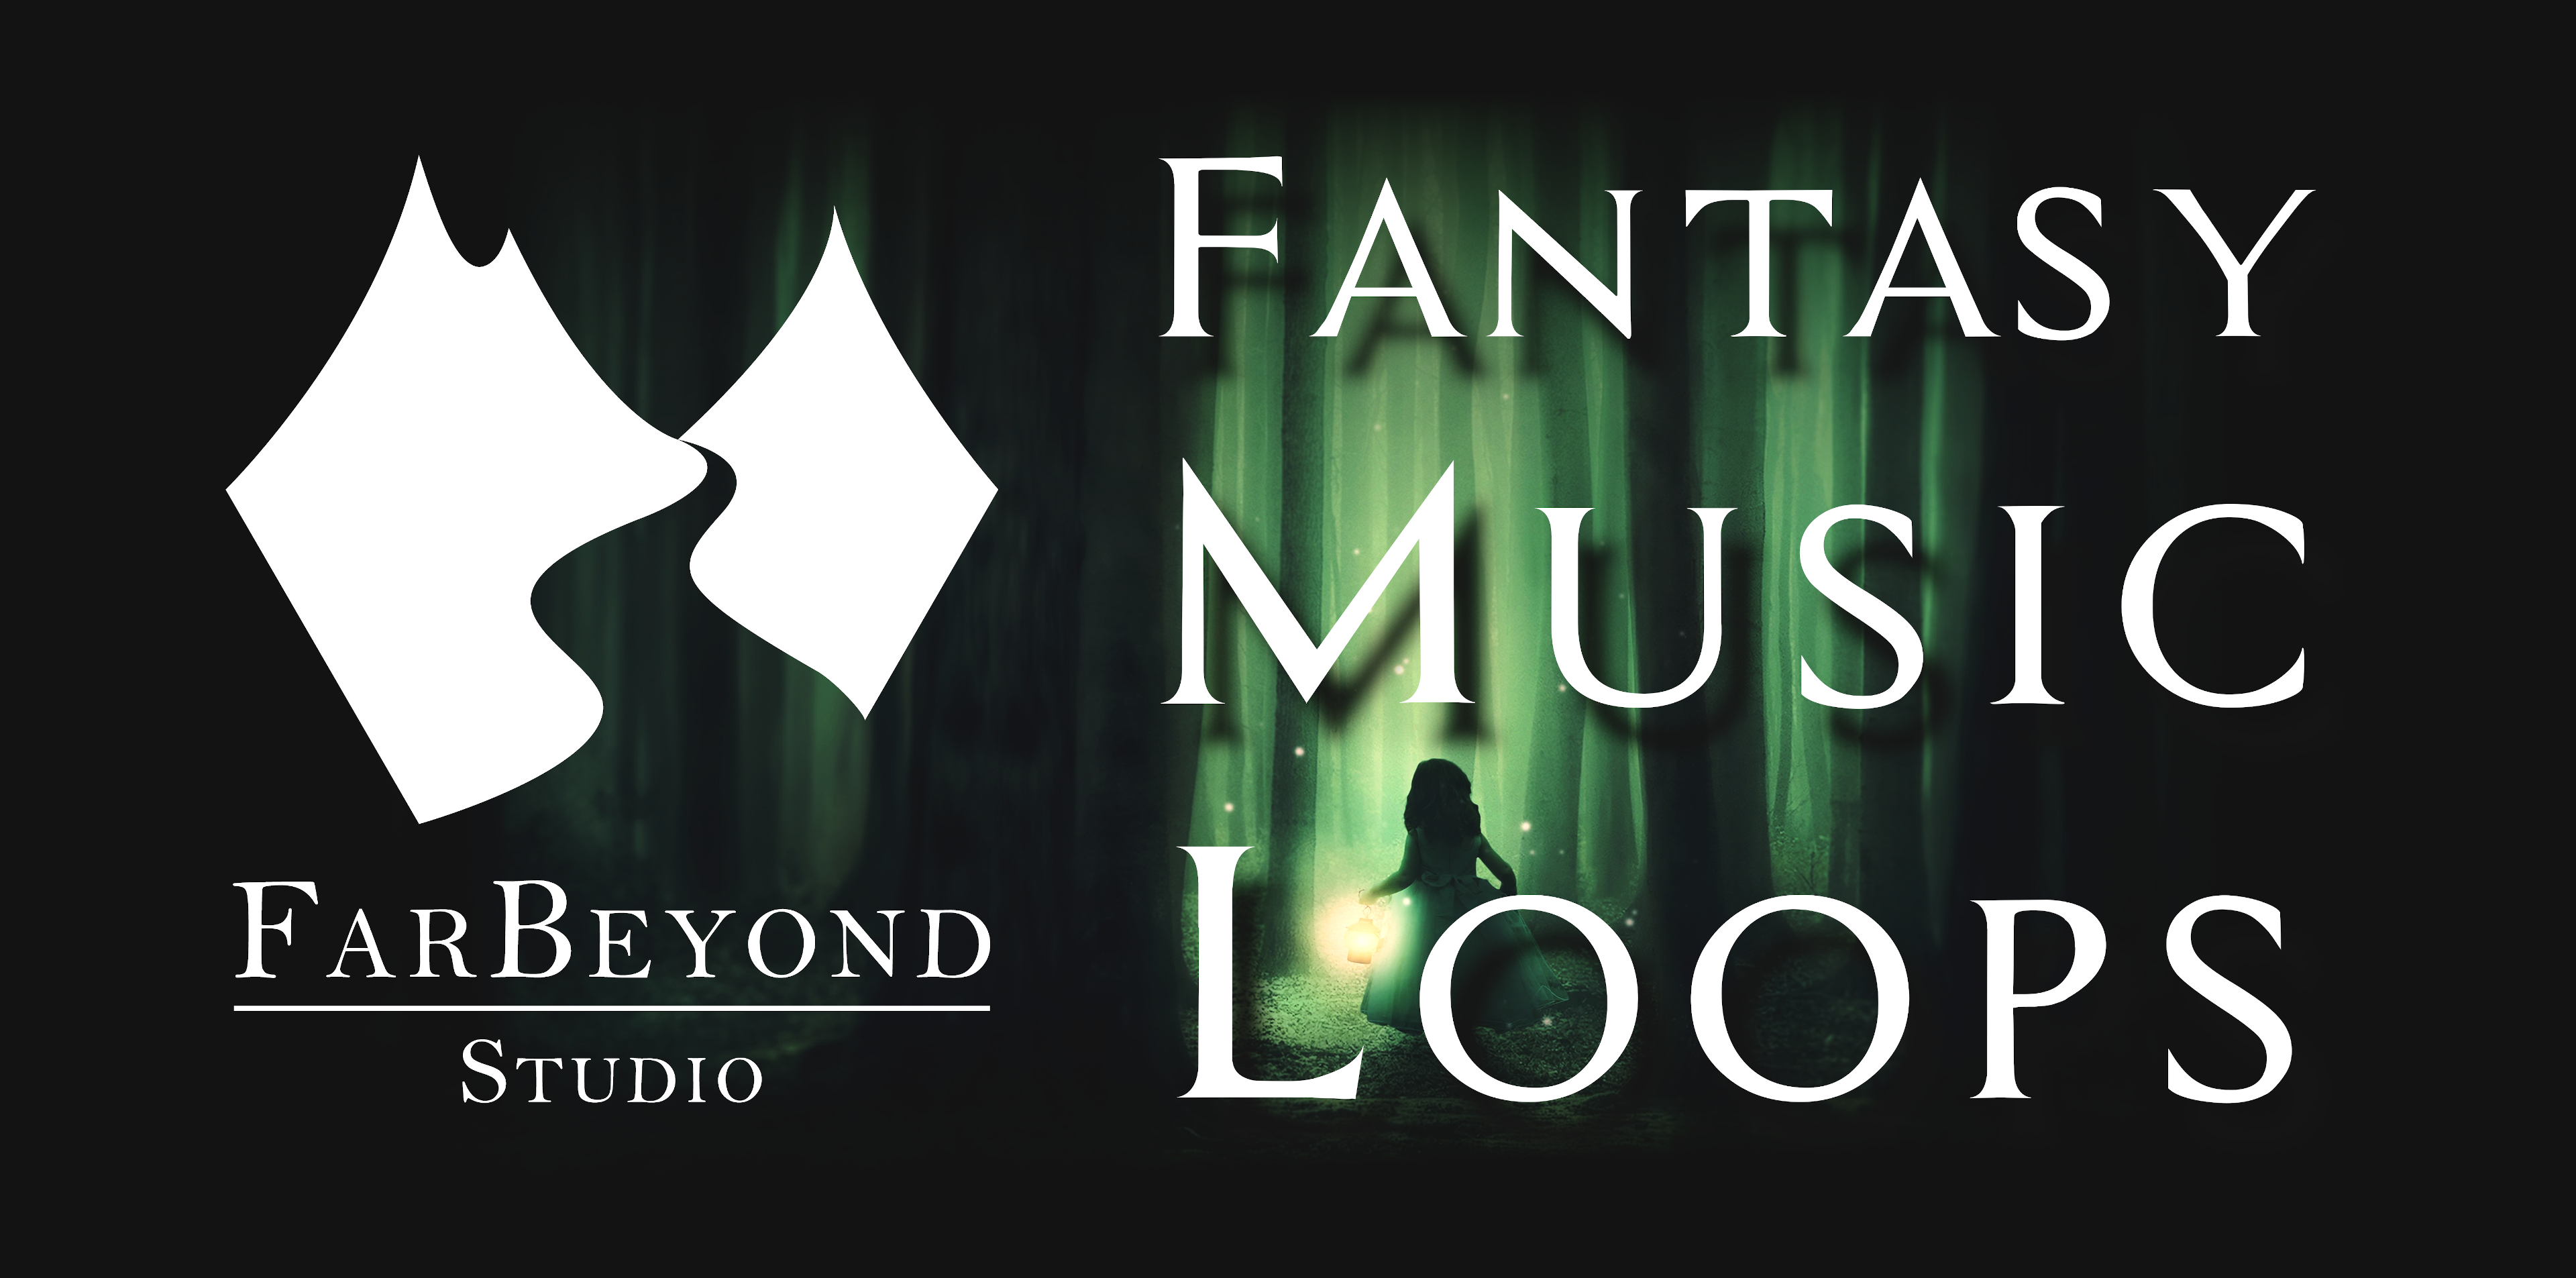 FANTASY MUSIC LOOPS for RPG, Adventure, Platformer, Visual Novel | Freebies Vol. 1 | Free